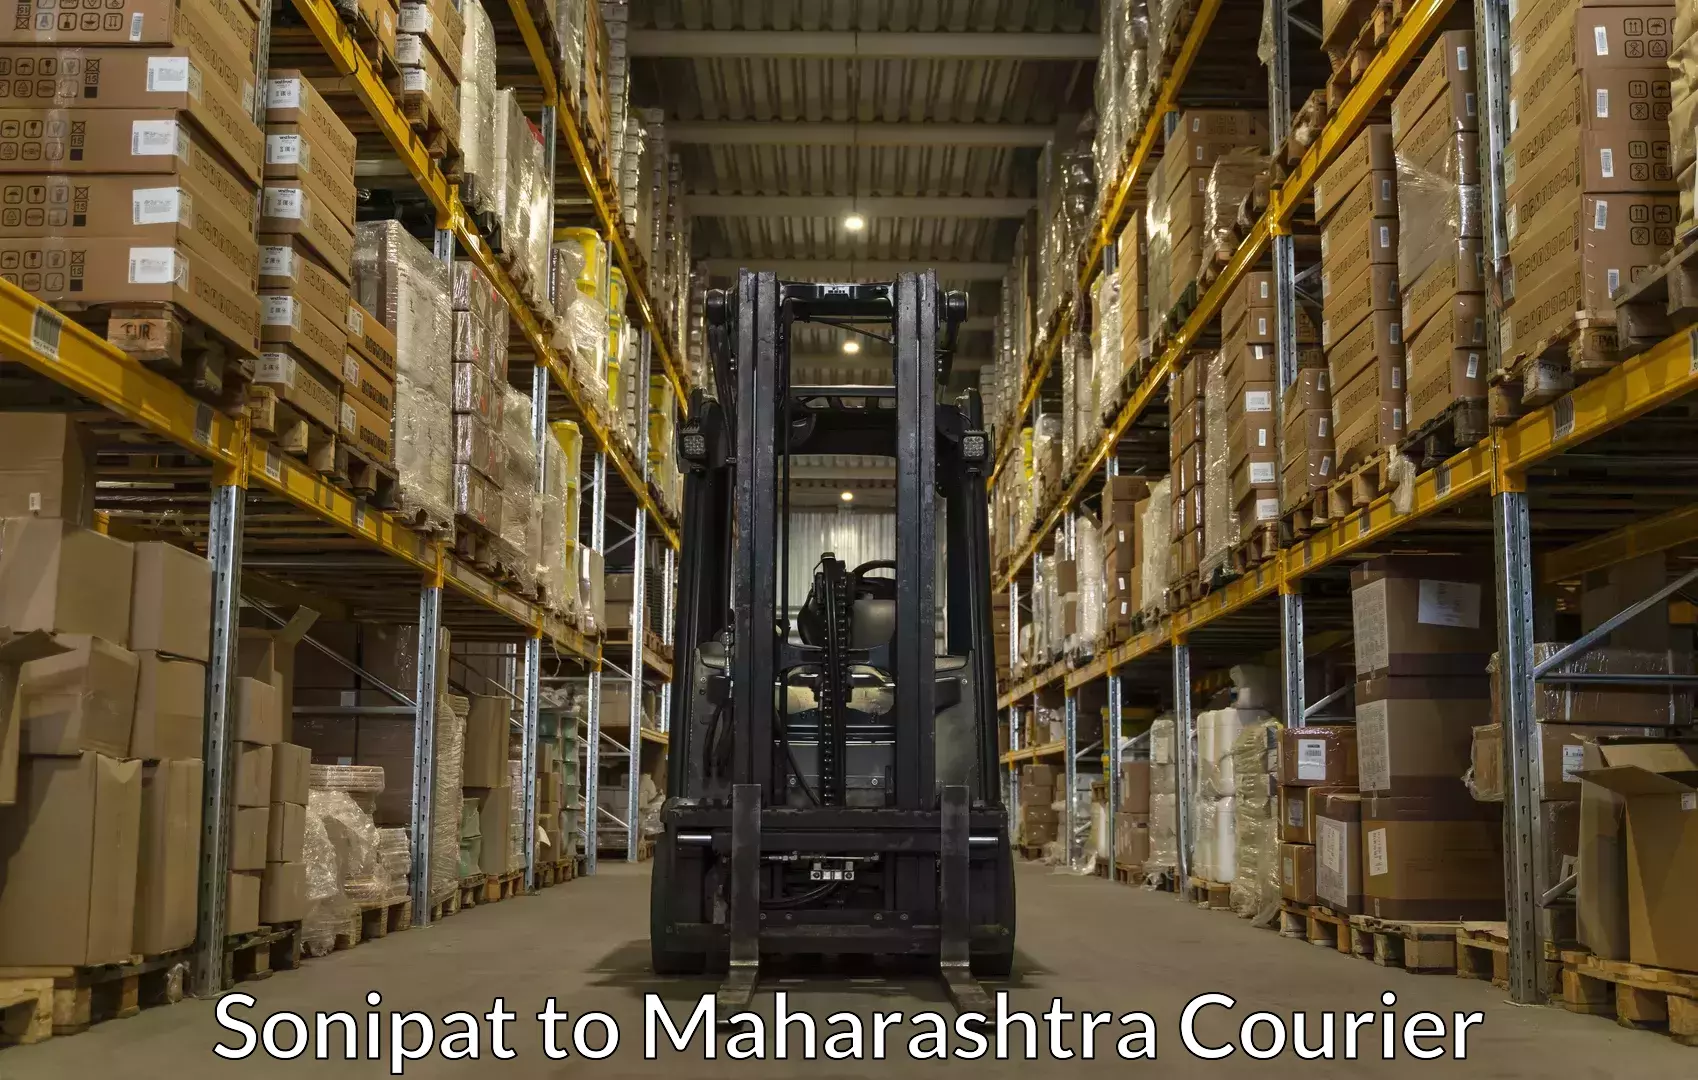 Baggage transport technology Sonipat to Maharashtra